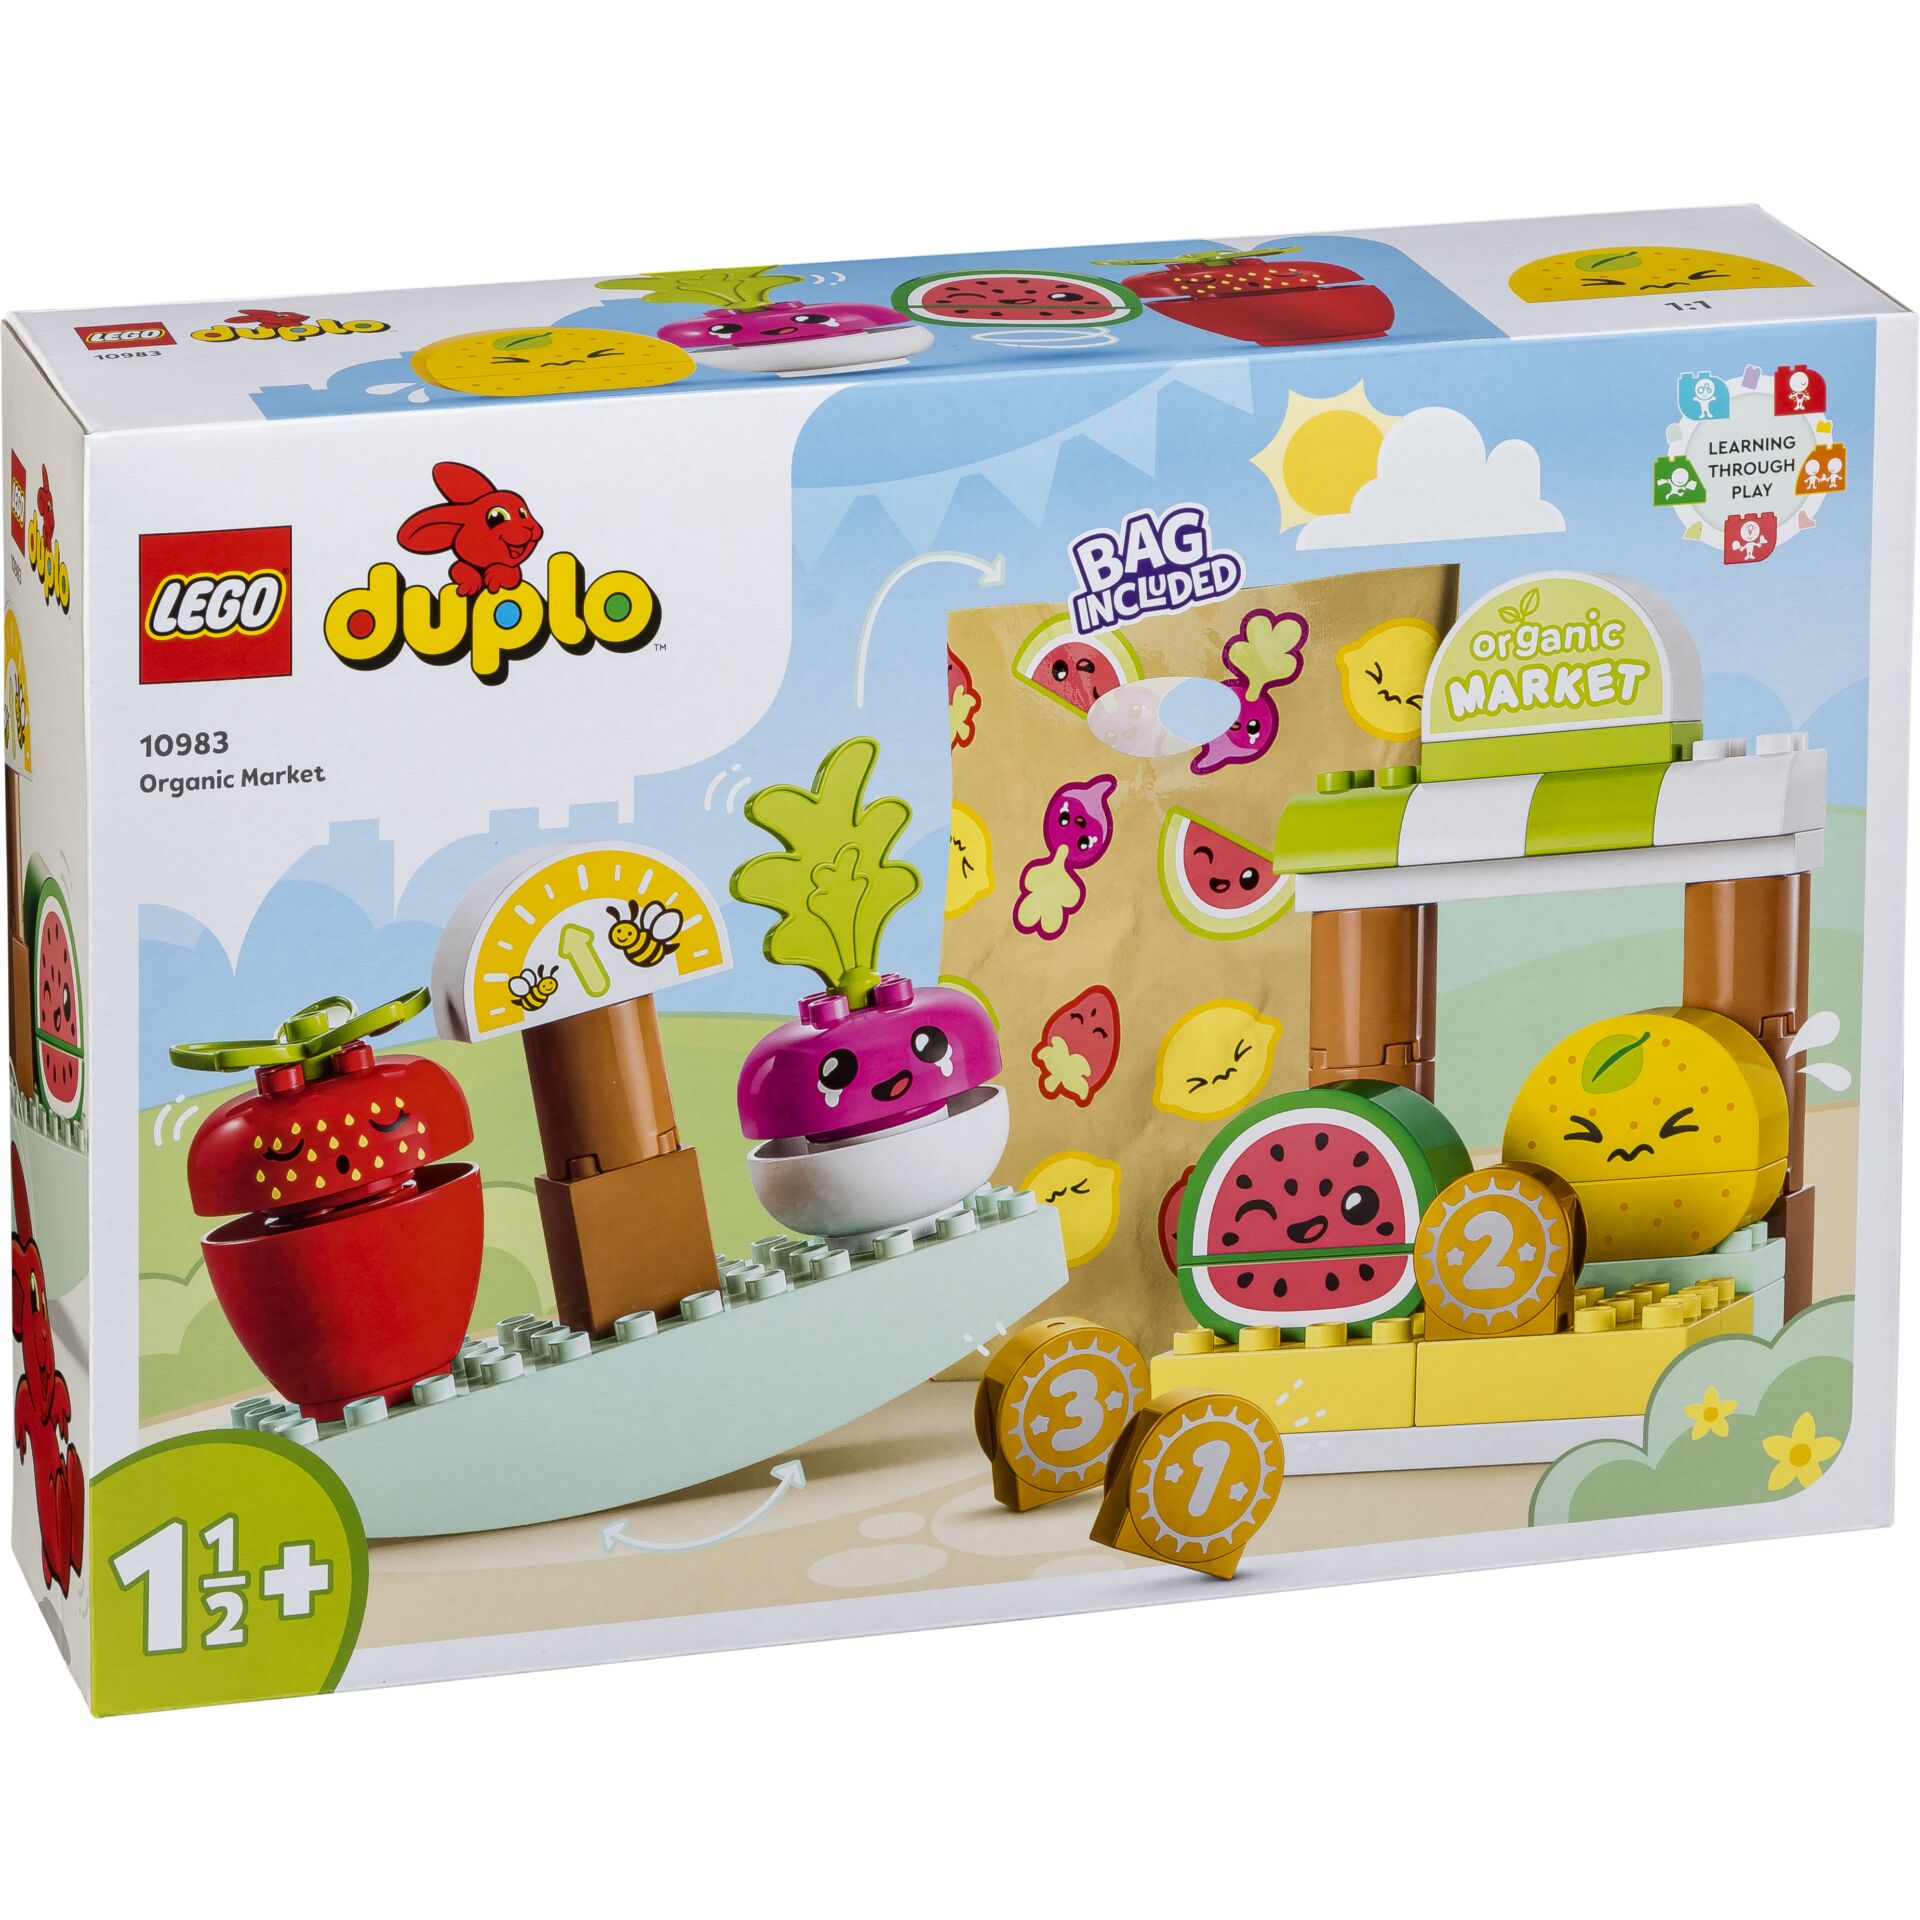 Lego -Konstruktionsspielzeug 10983 Biomarkt -Lego Toys/Spielzeug DUPLO